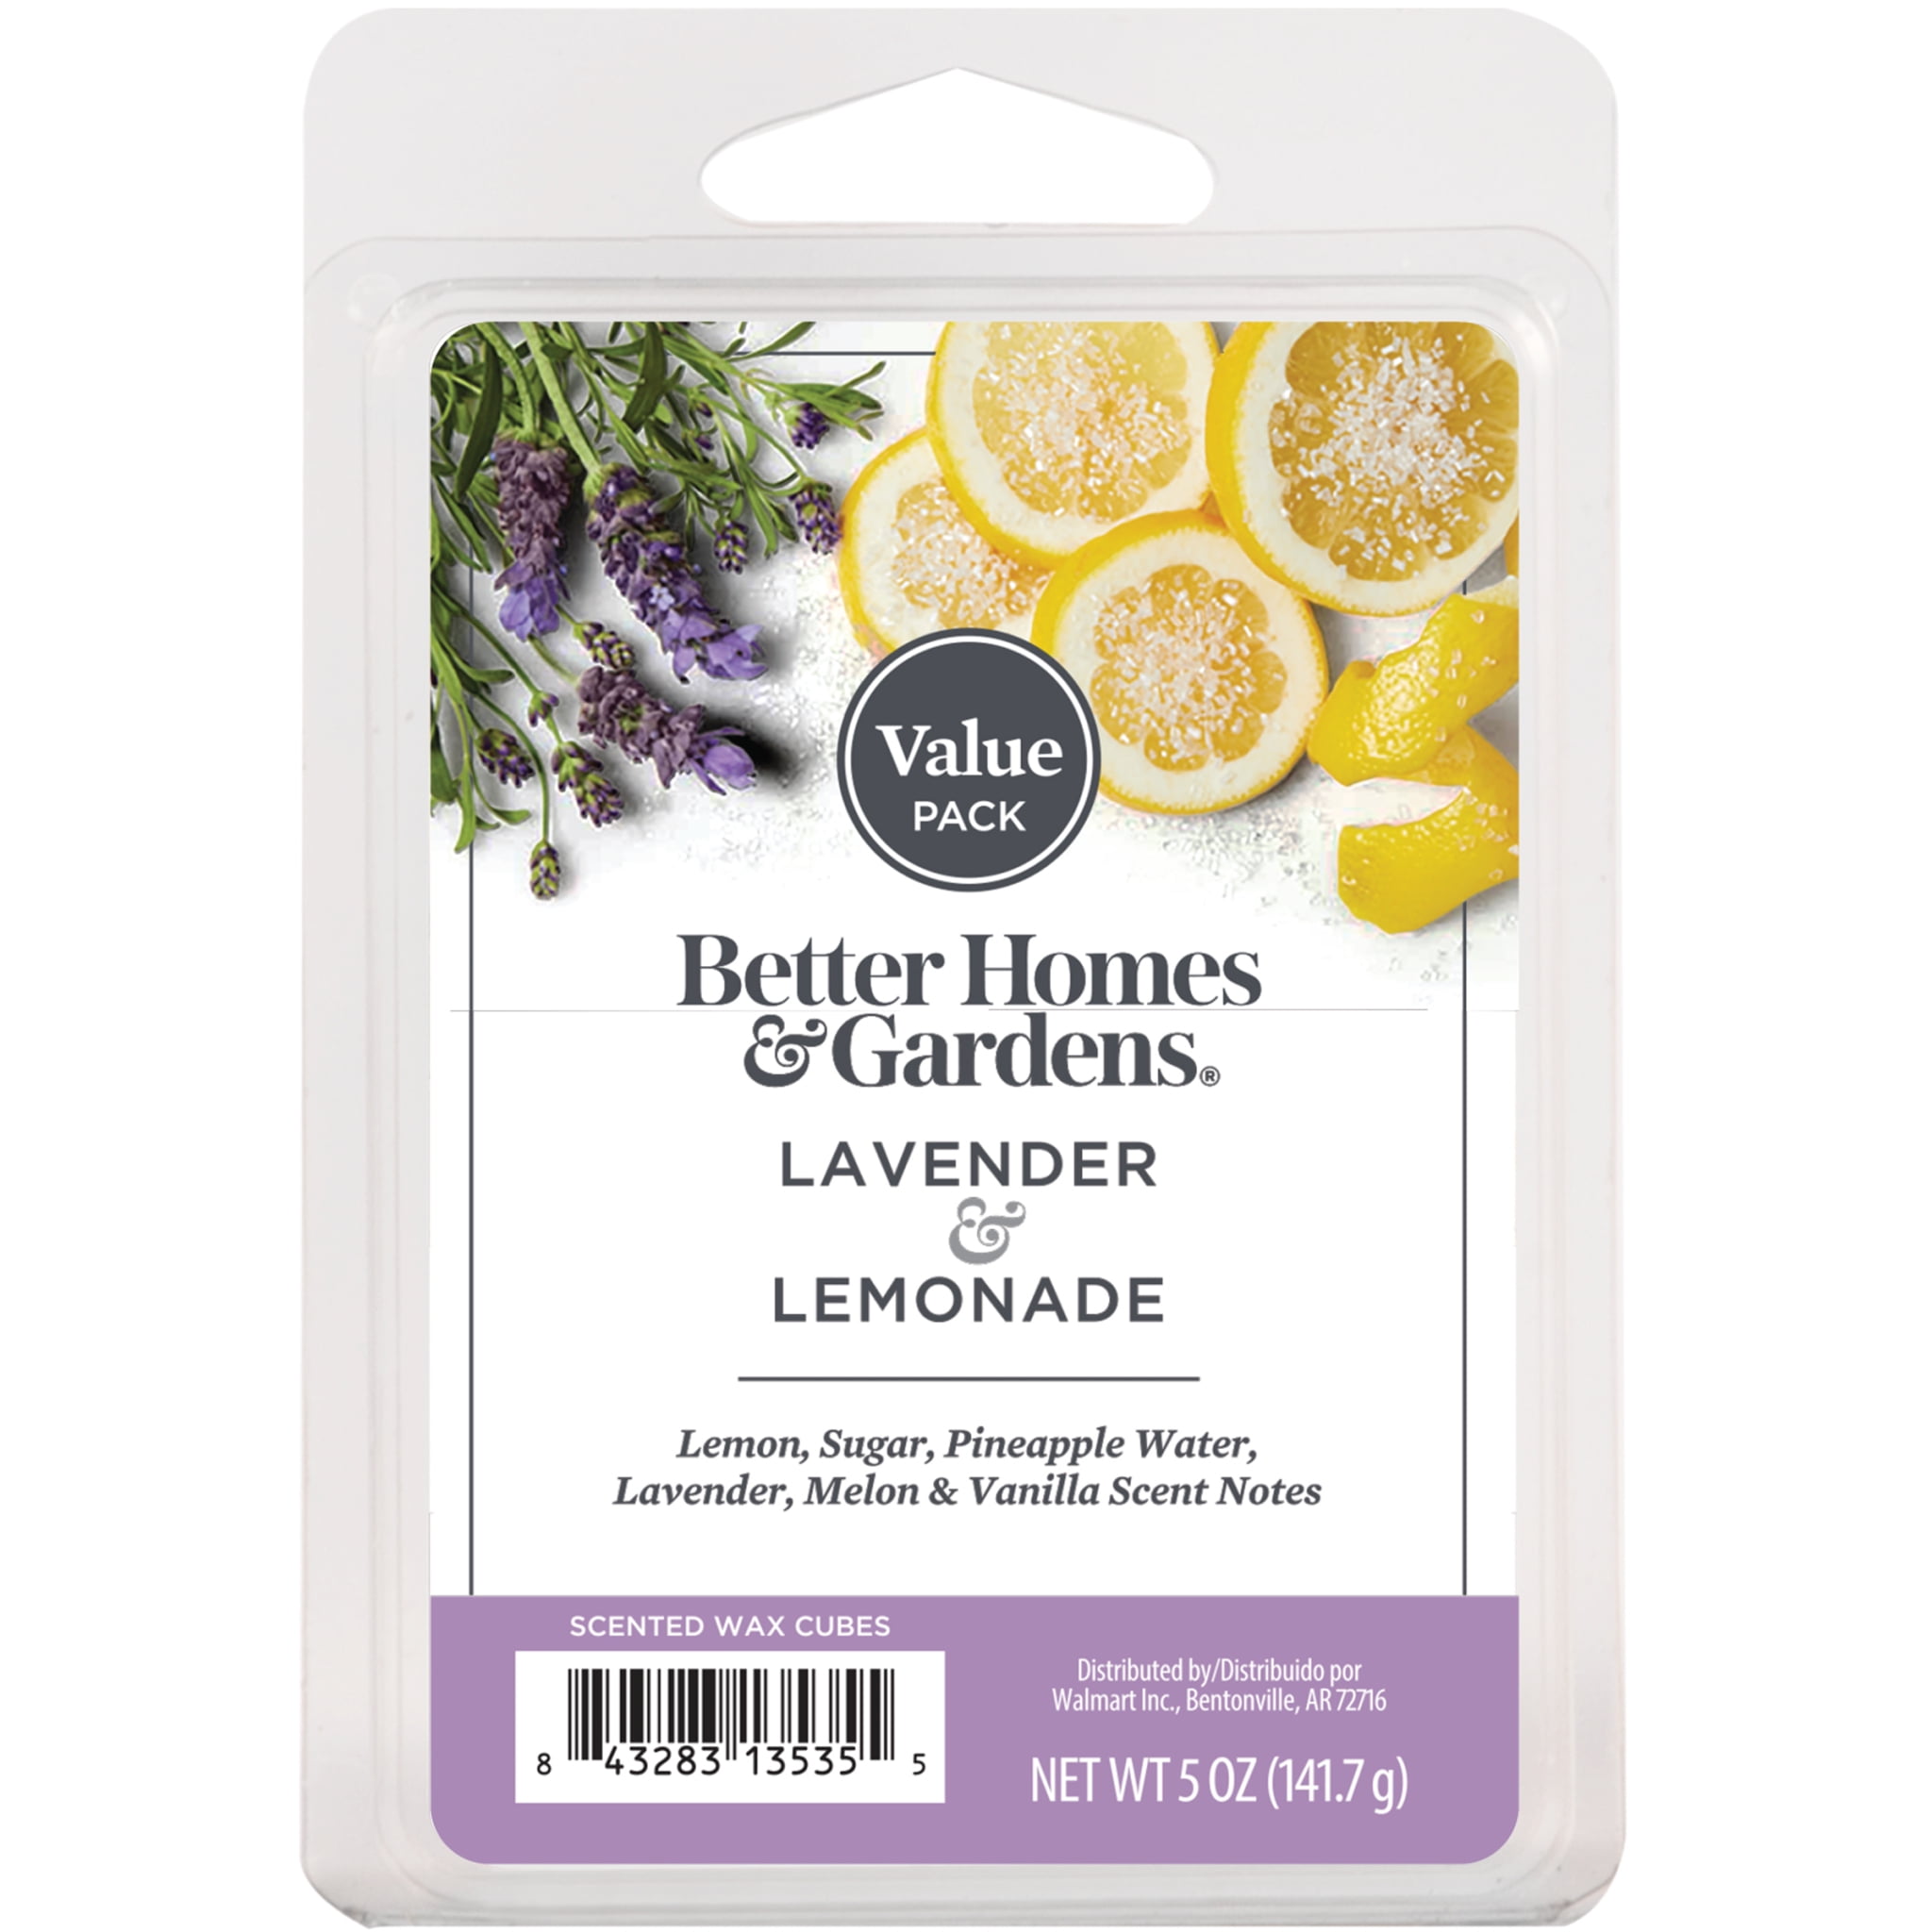 Blueberry Lavender Lemonade Candle